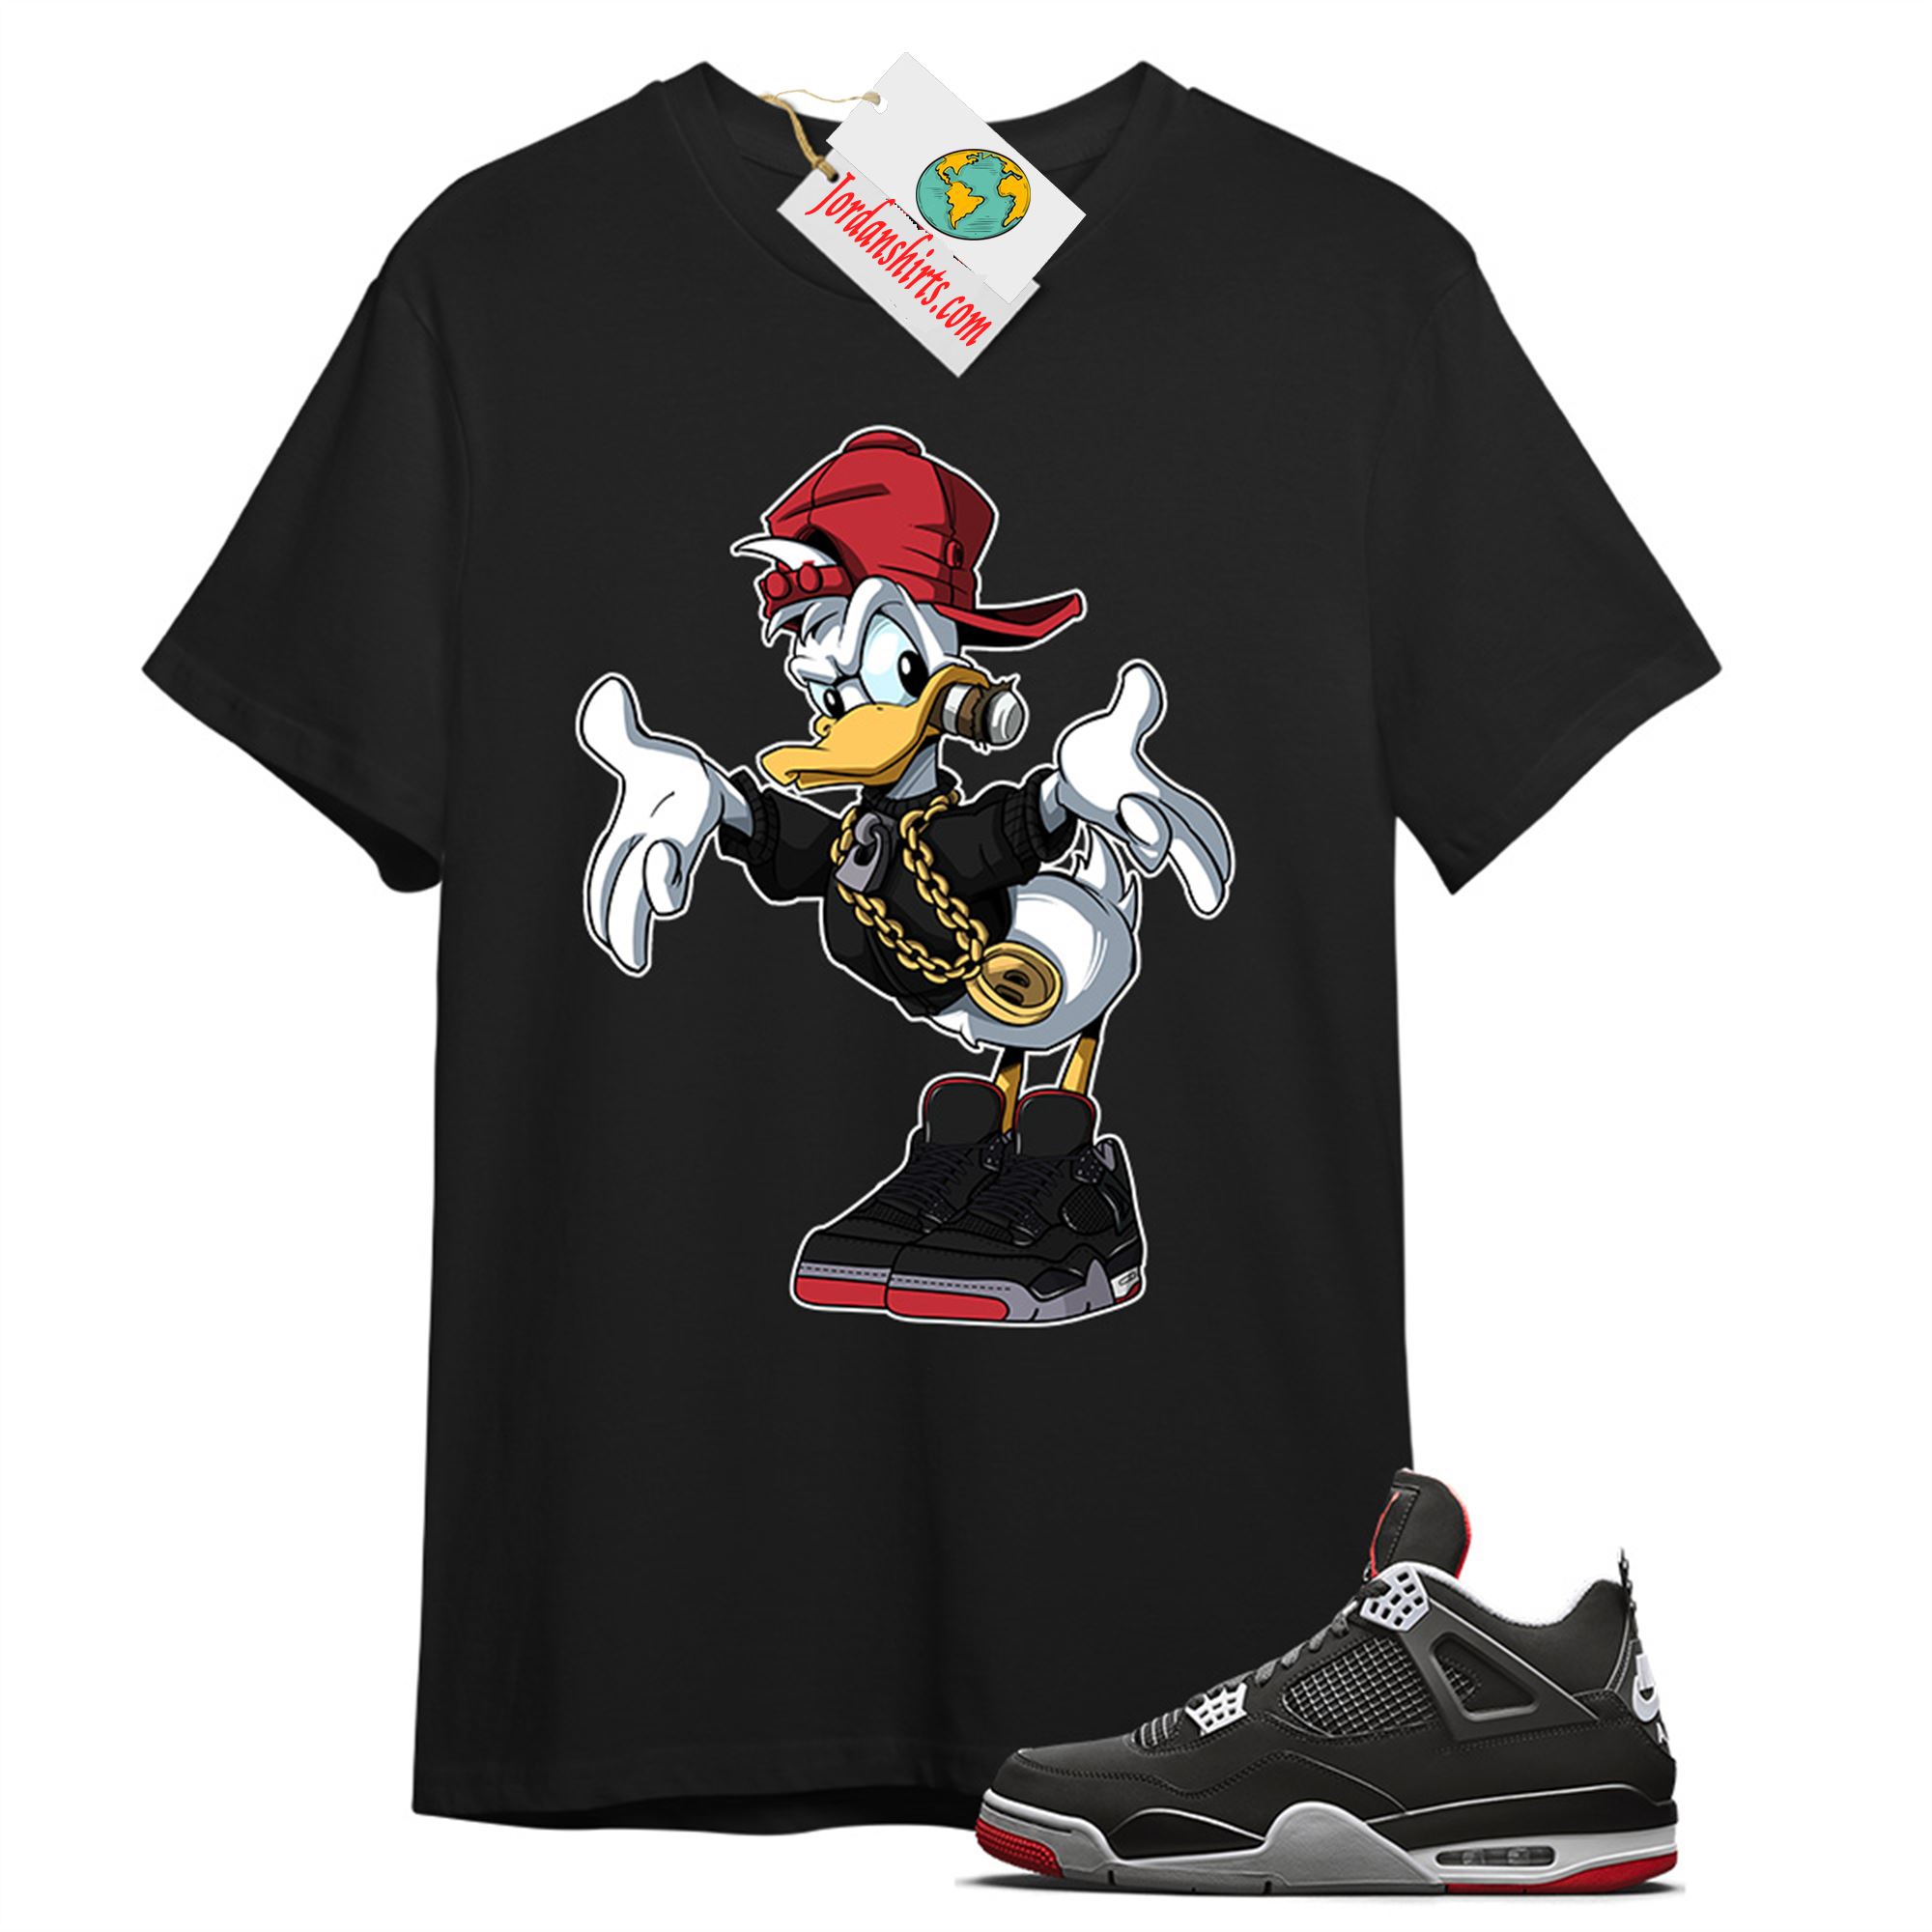 Jordan 4 Shirt, Donald Duck Black T-shirt Air Jordan 4 Bred 4s Full Size Up To 5xl